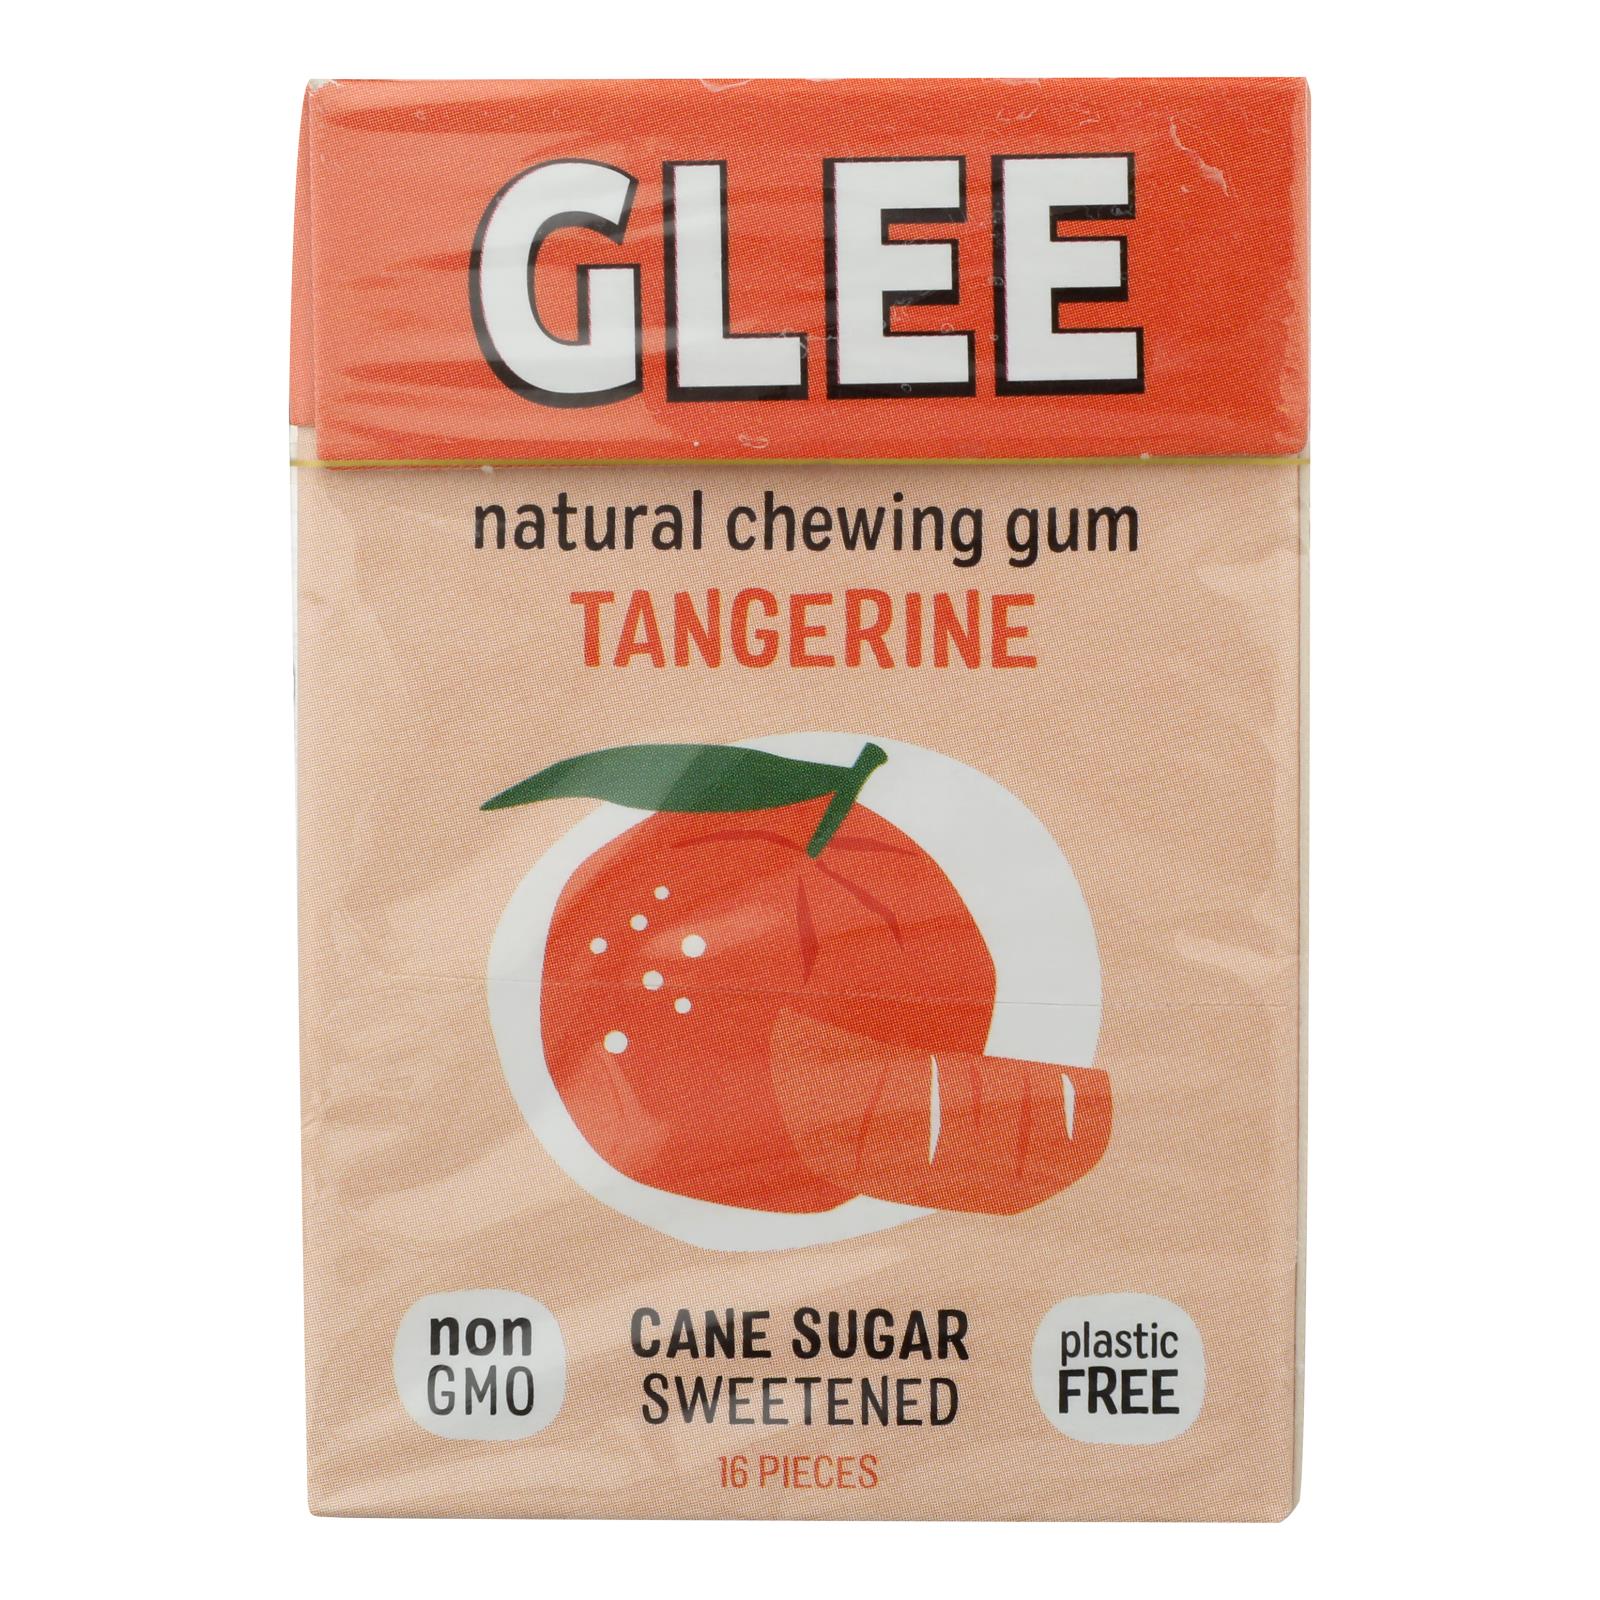 Glee Gum Chewing Gum - Tangerine - Case of 12 - 16 Pieces